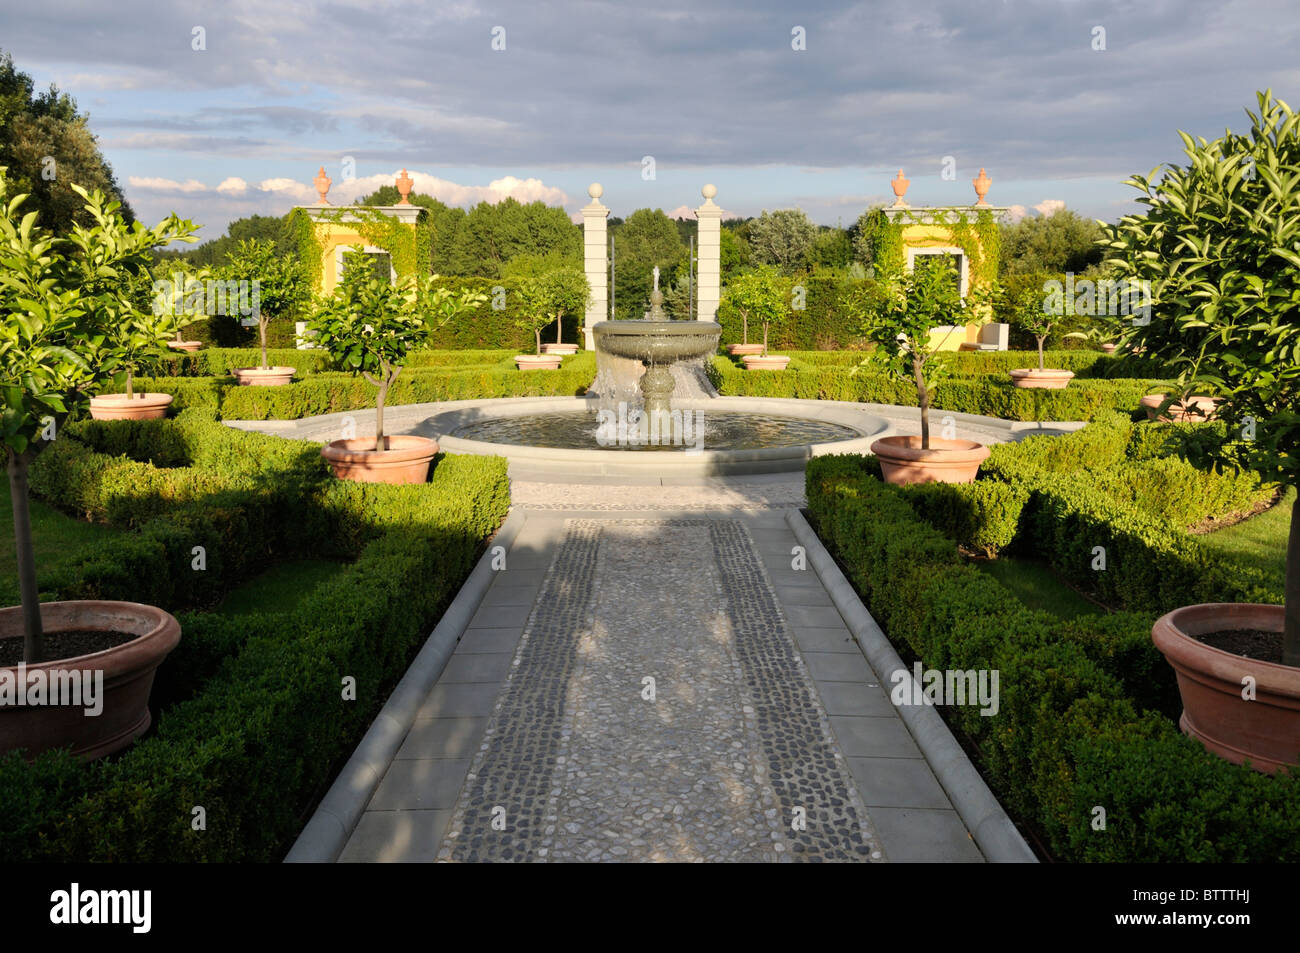 Jardin de style renaissance italienne, erholungspark marzahn, Berlin, Allemagne Banque D'Images